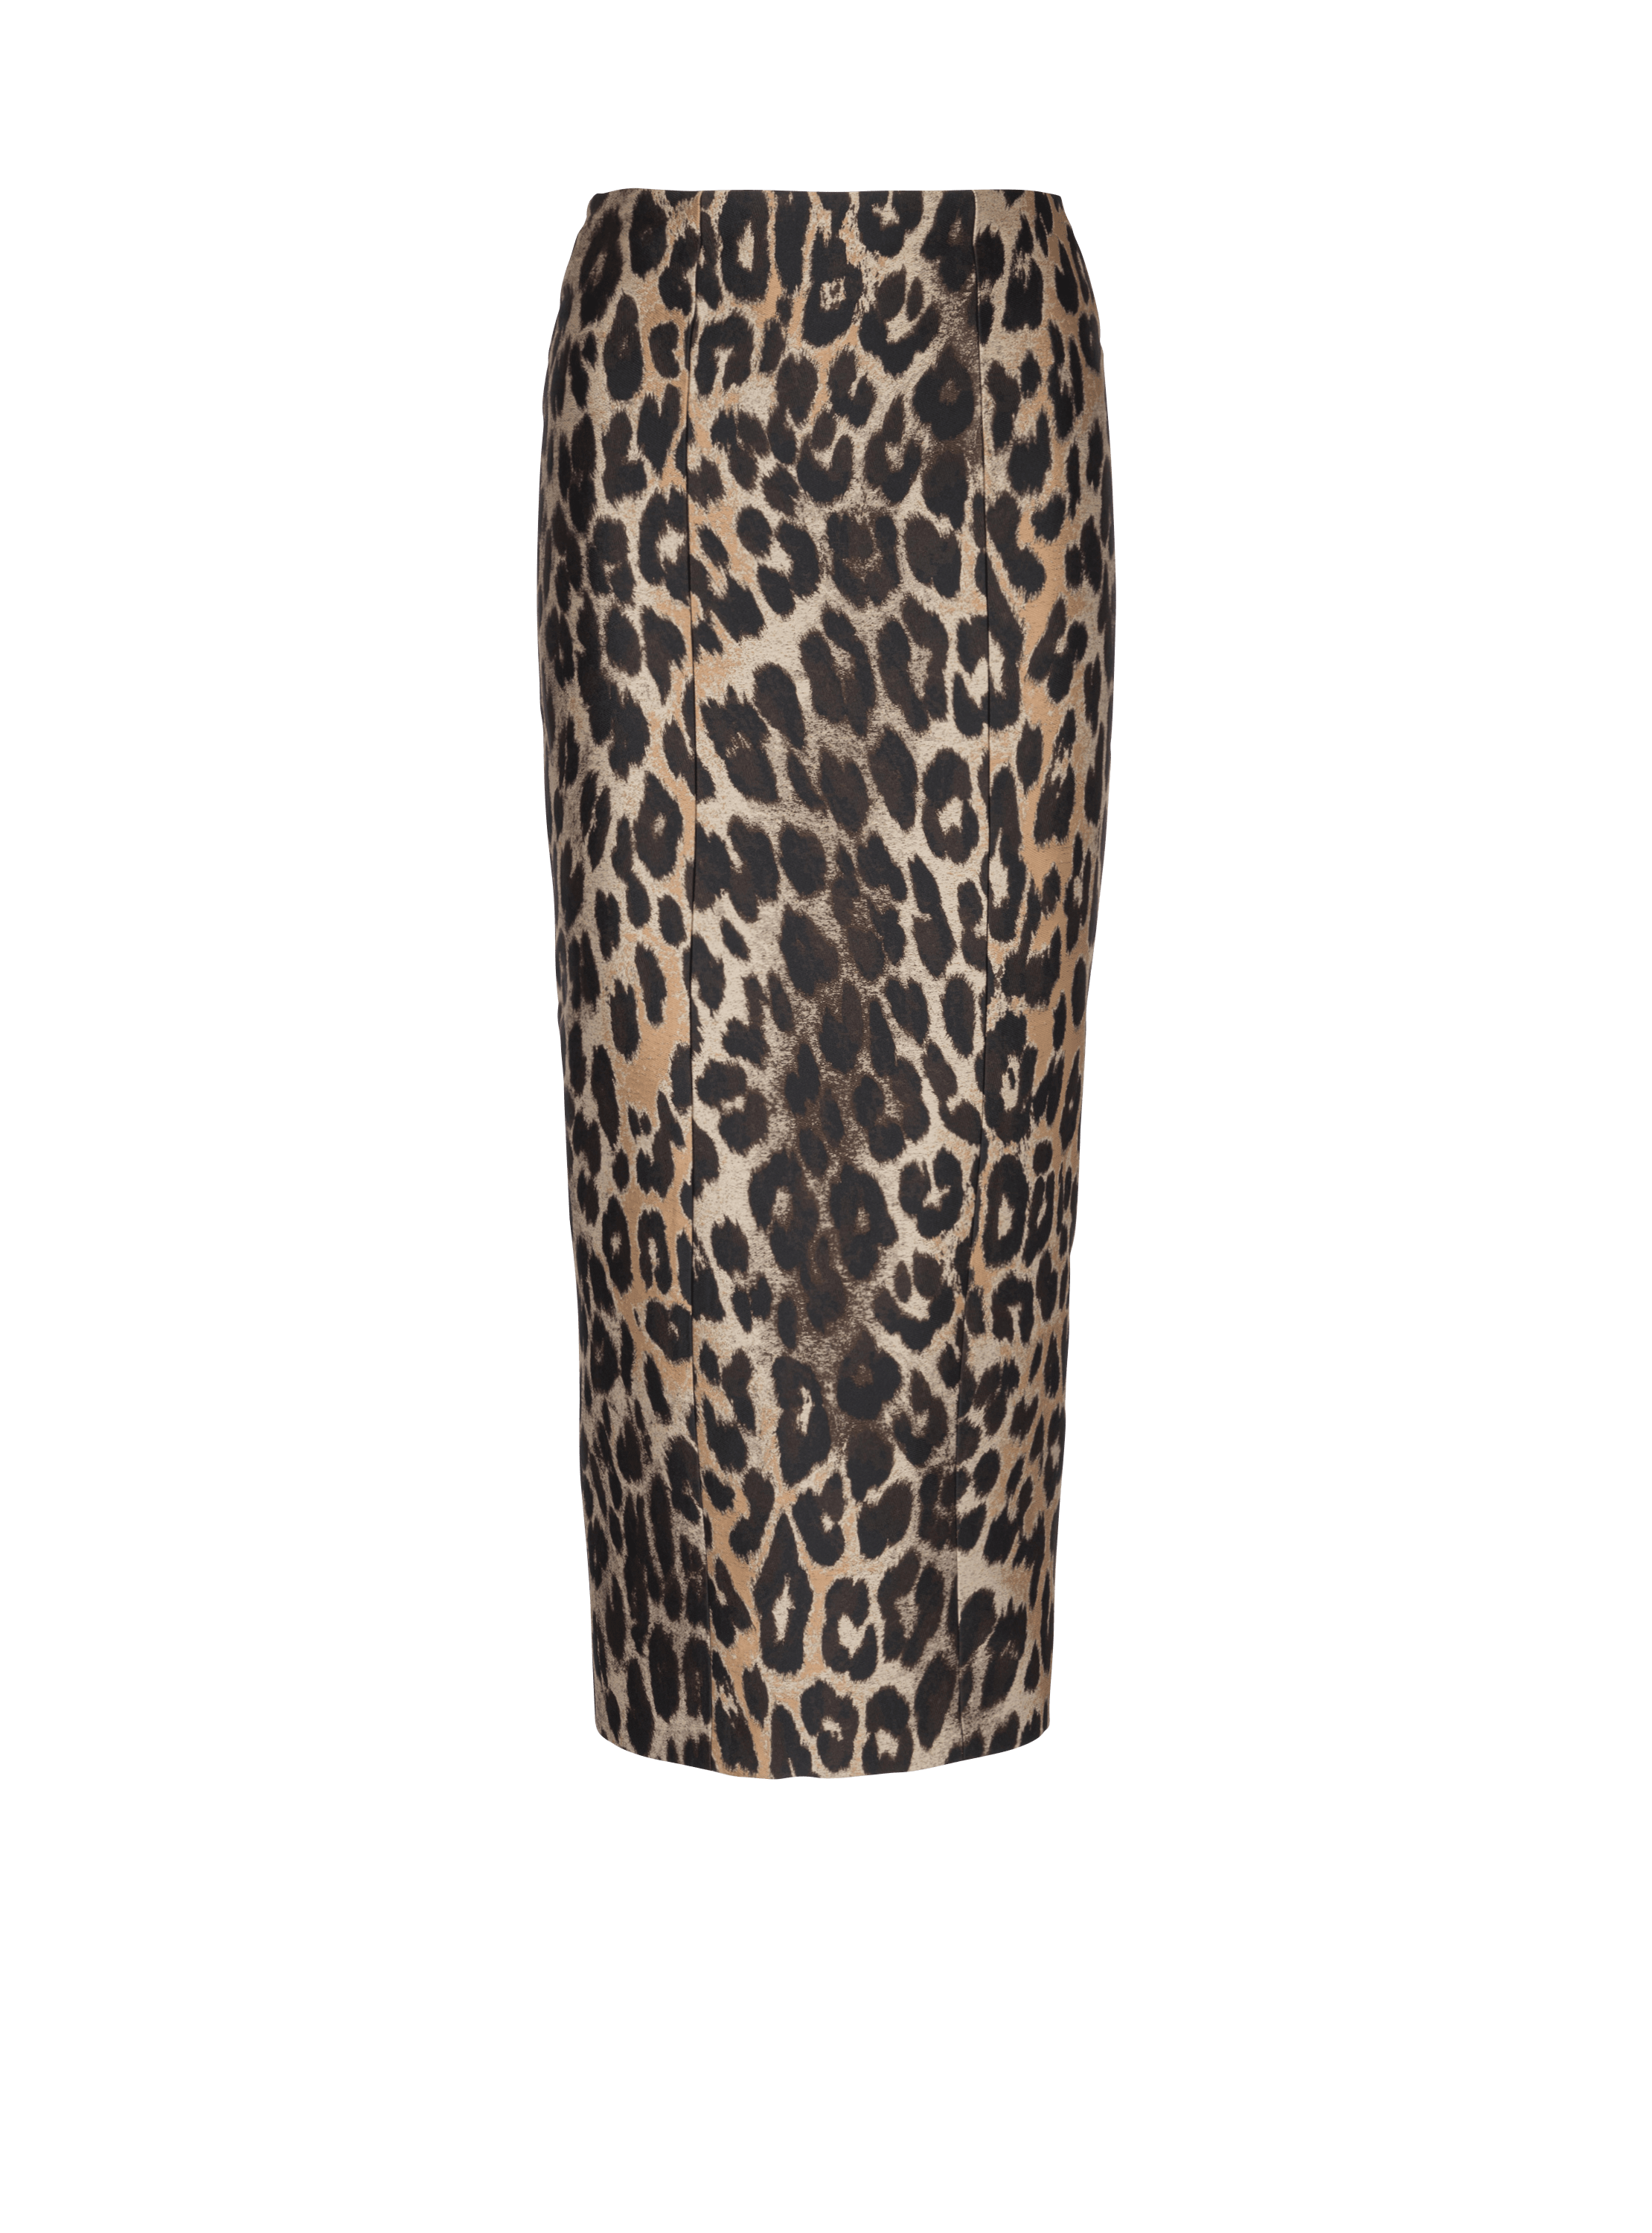 Leopard jacquard pencil skirt, brown, hi-res